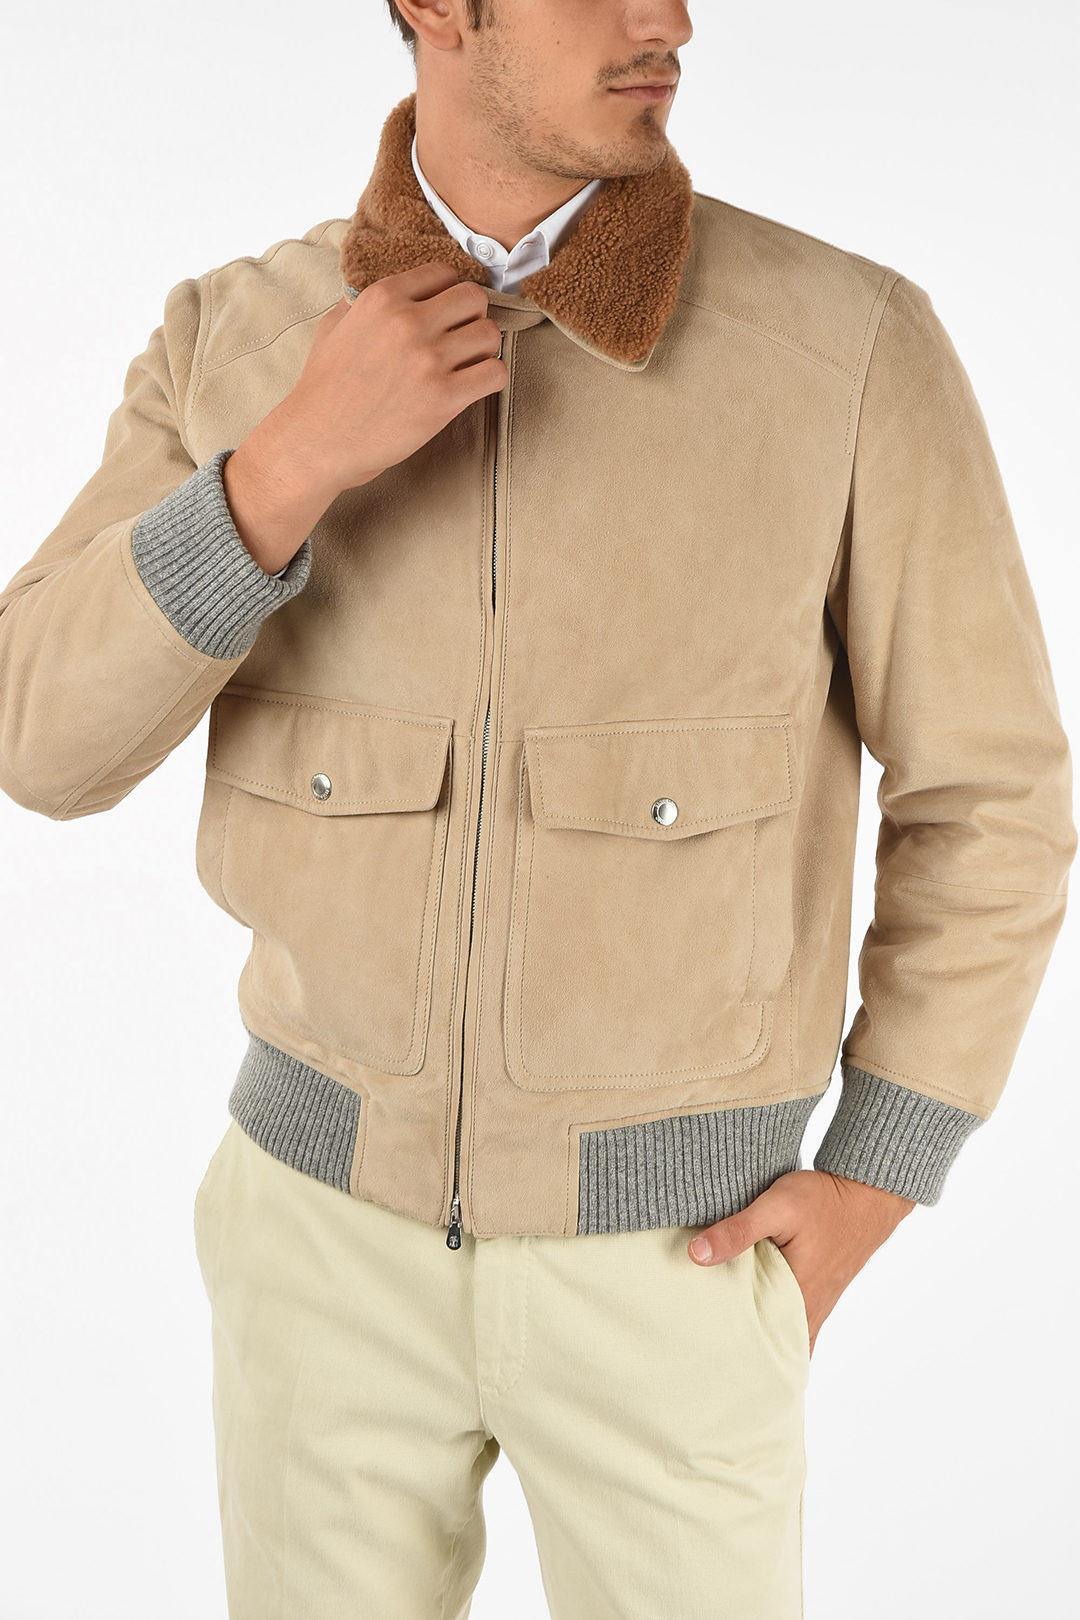 Brunello Cucinelli Suede Leather Flight Jacket men - Glamood Outlet